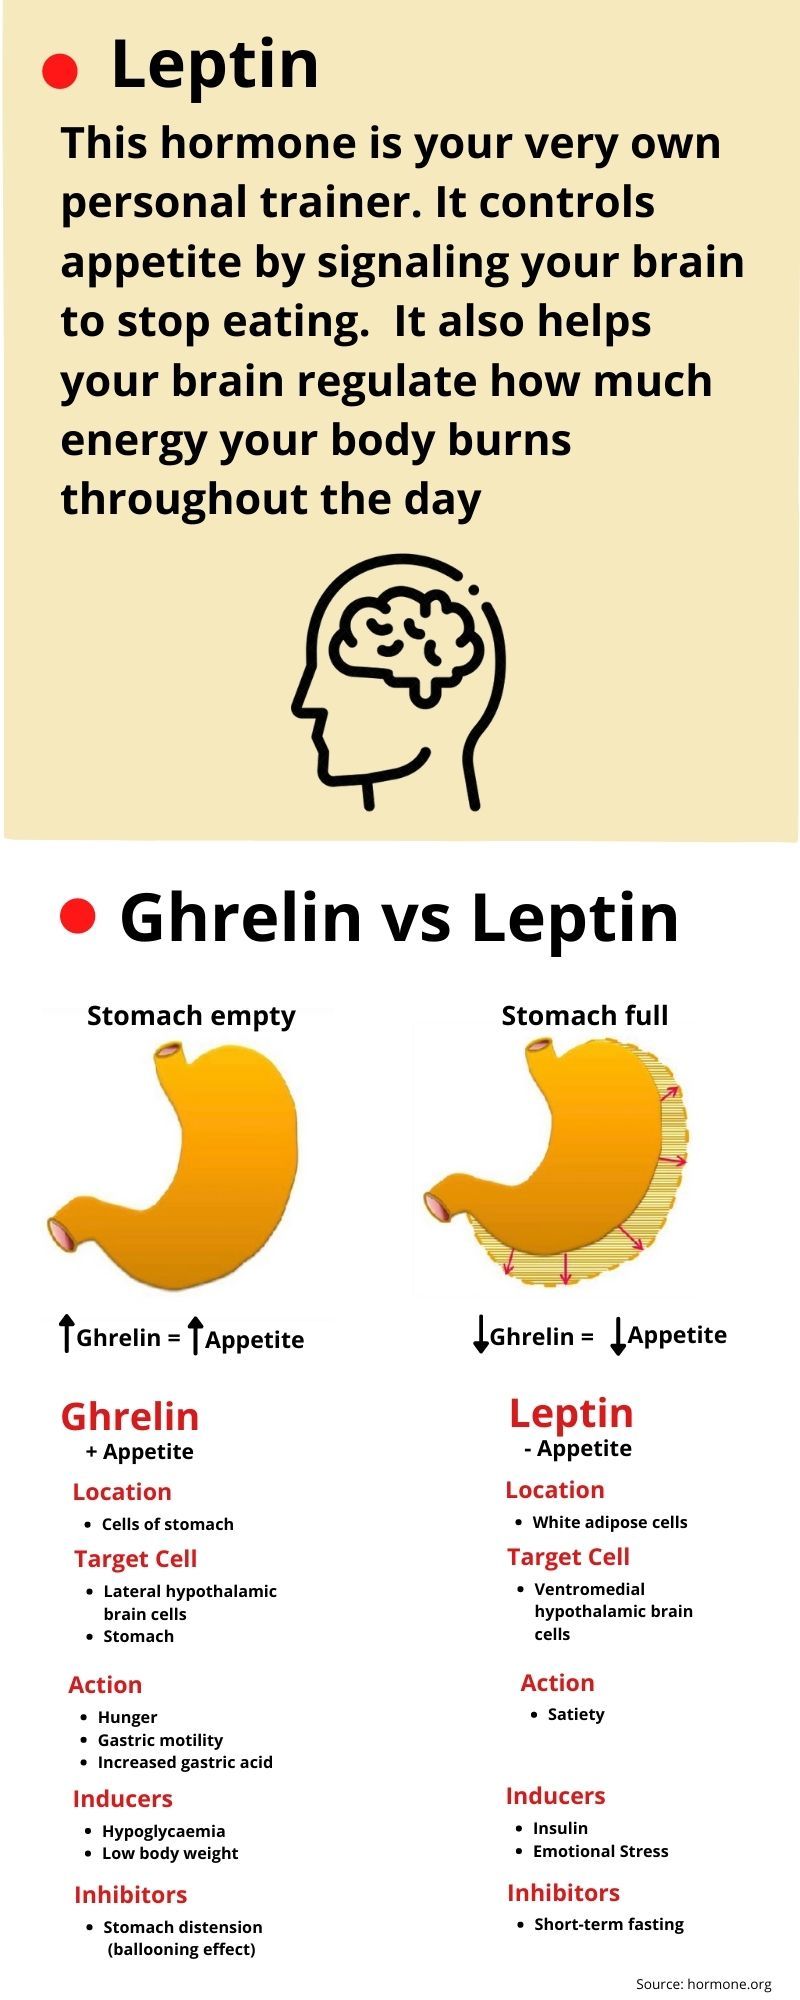 Leptin vs Ghrelin